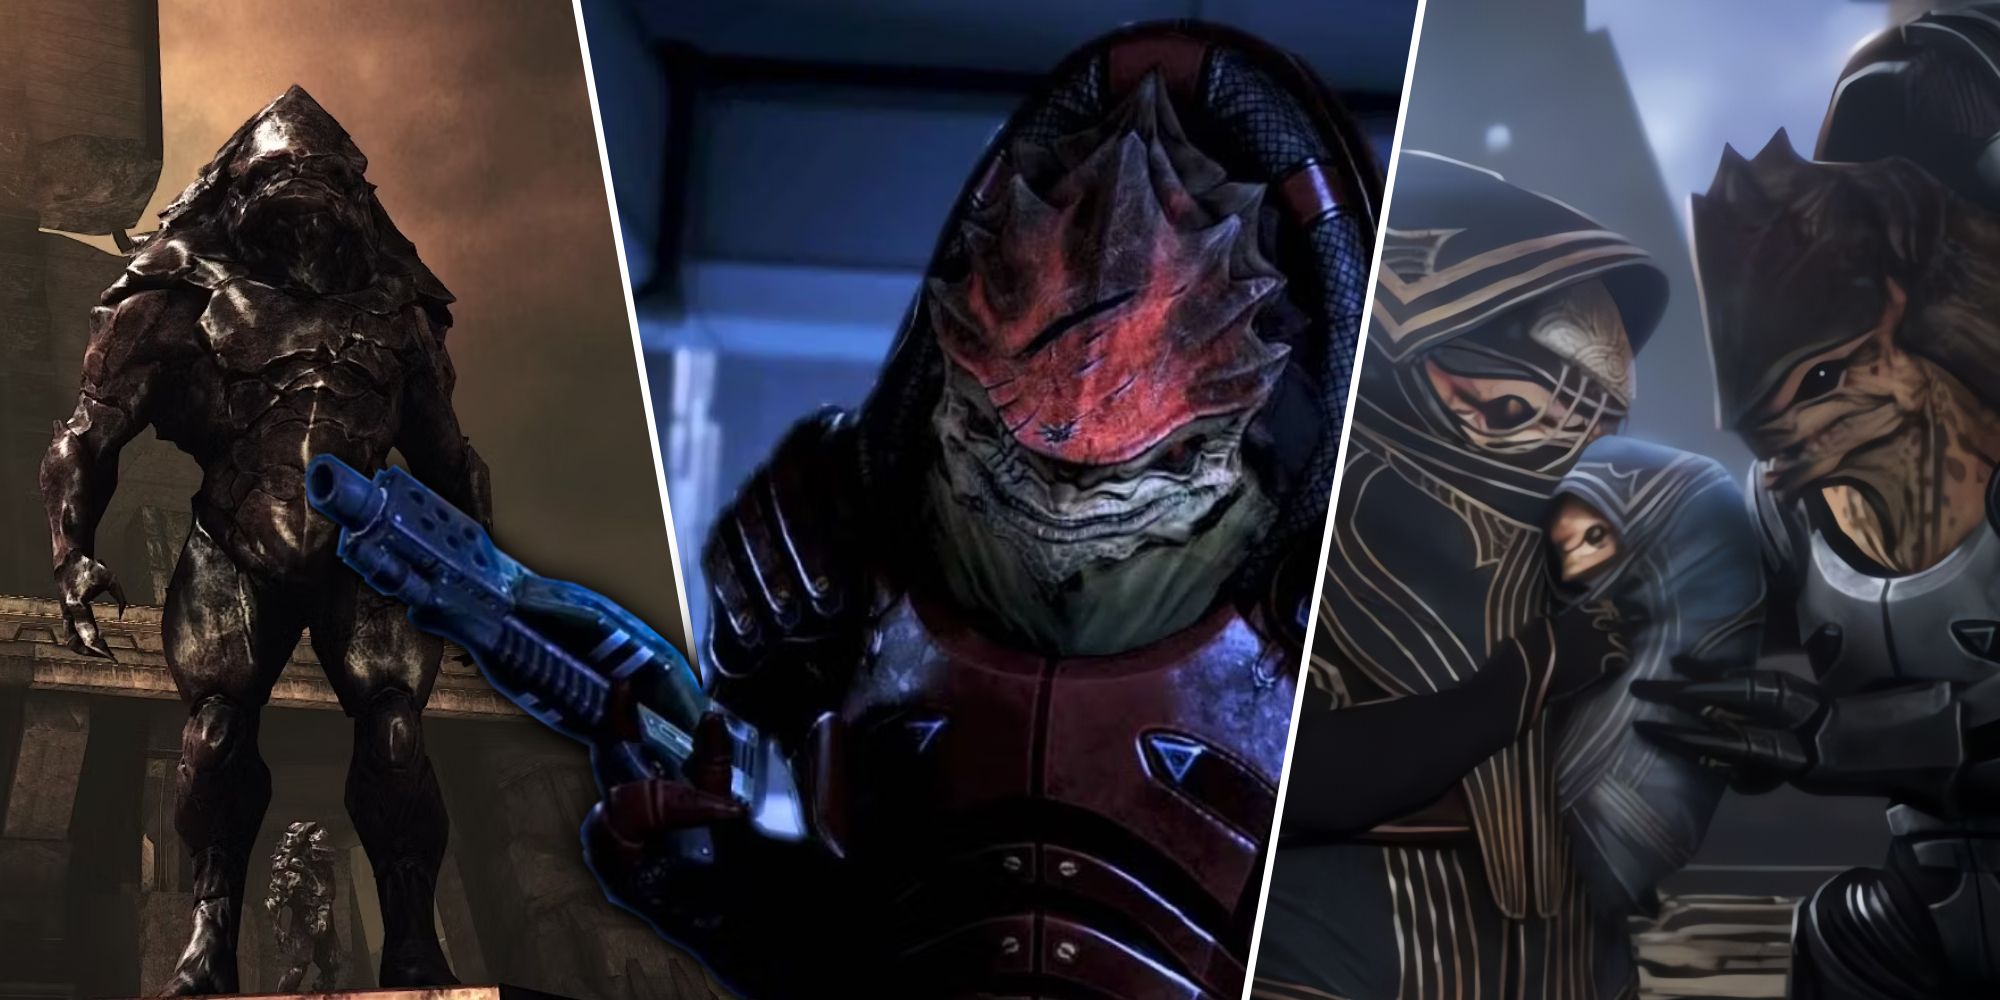 Split image of Krogans from Mass Effect